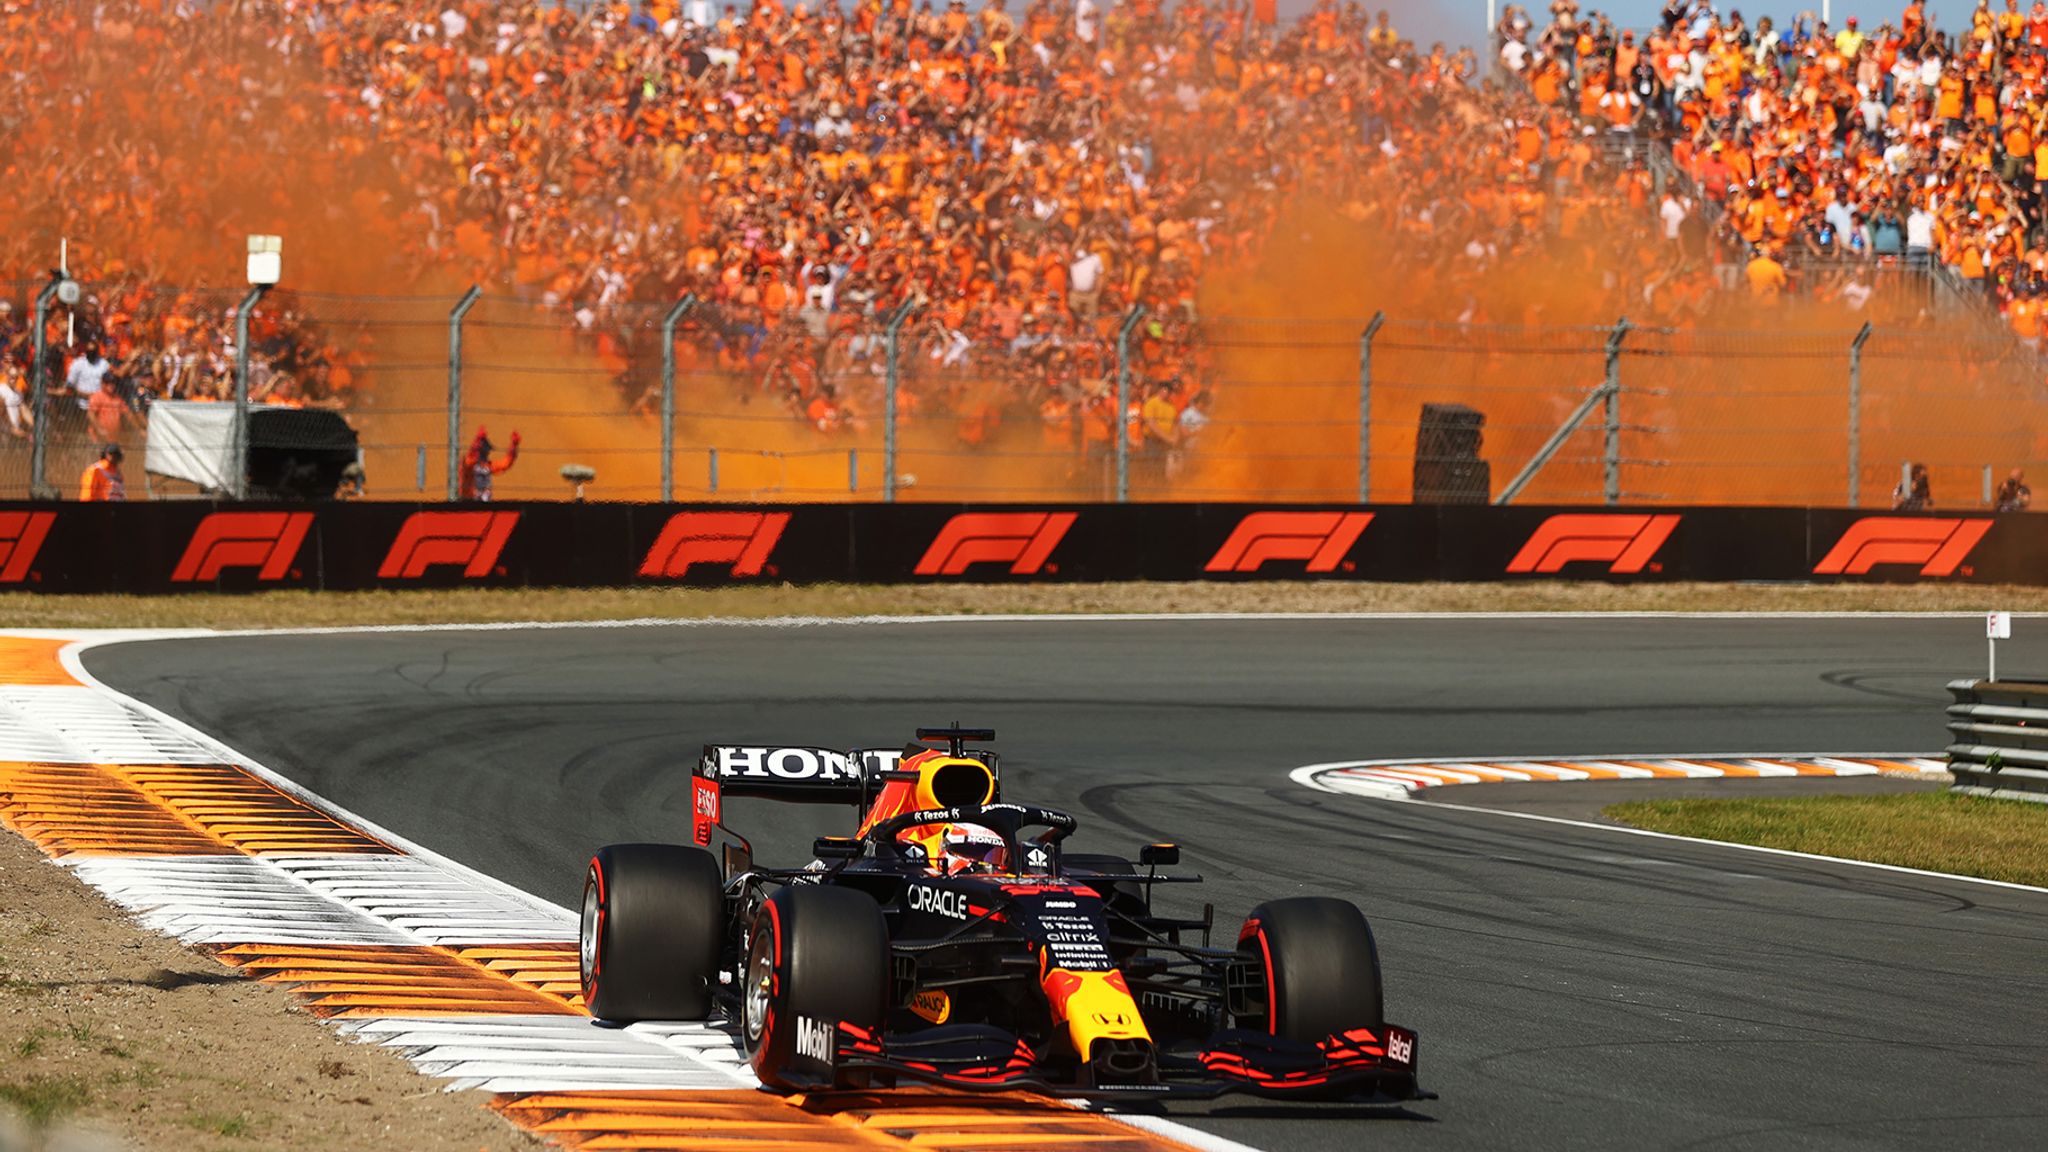 Dutch GP Max Verstappen beats Lewis Hamilton at home Zandvoort race and retakes F1 title lead F1 News